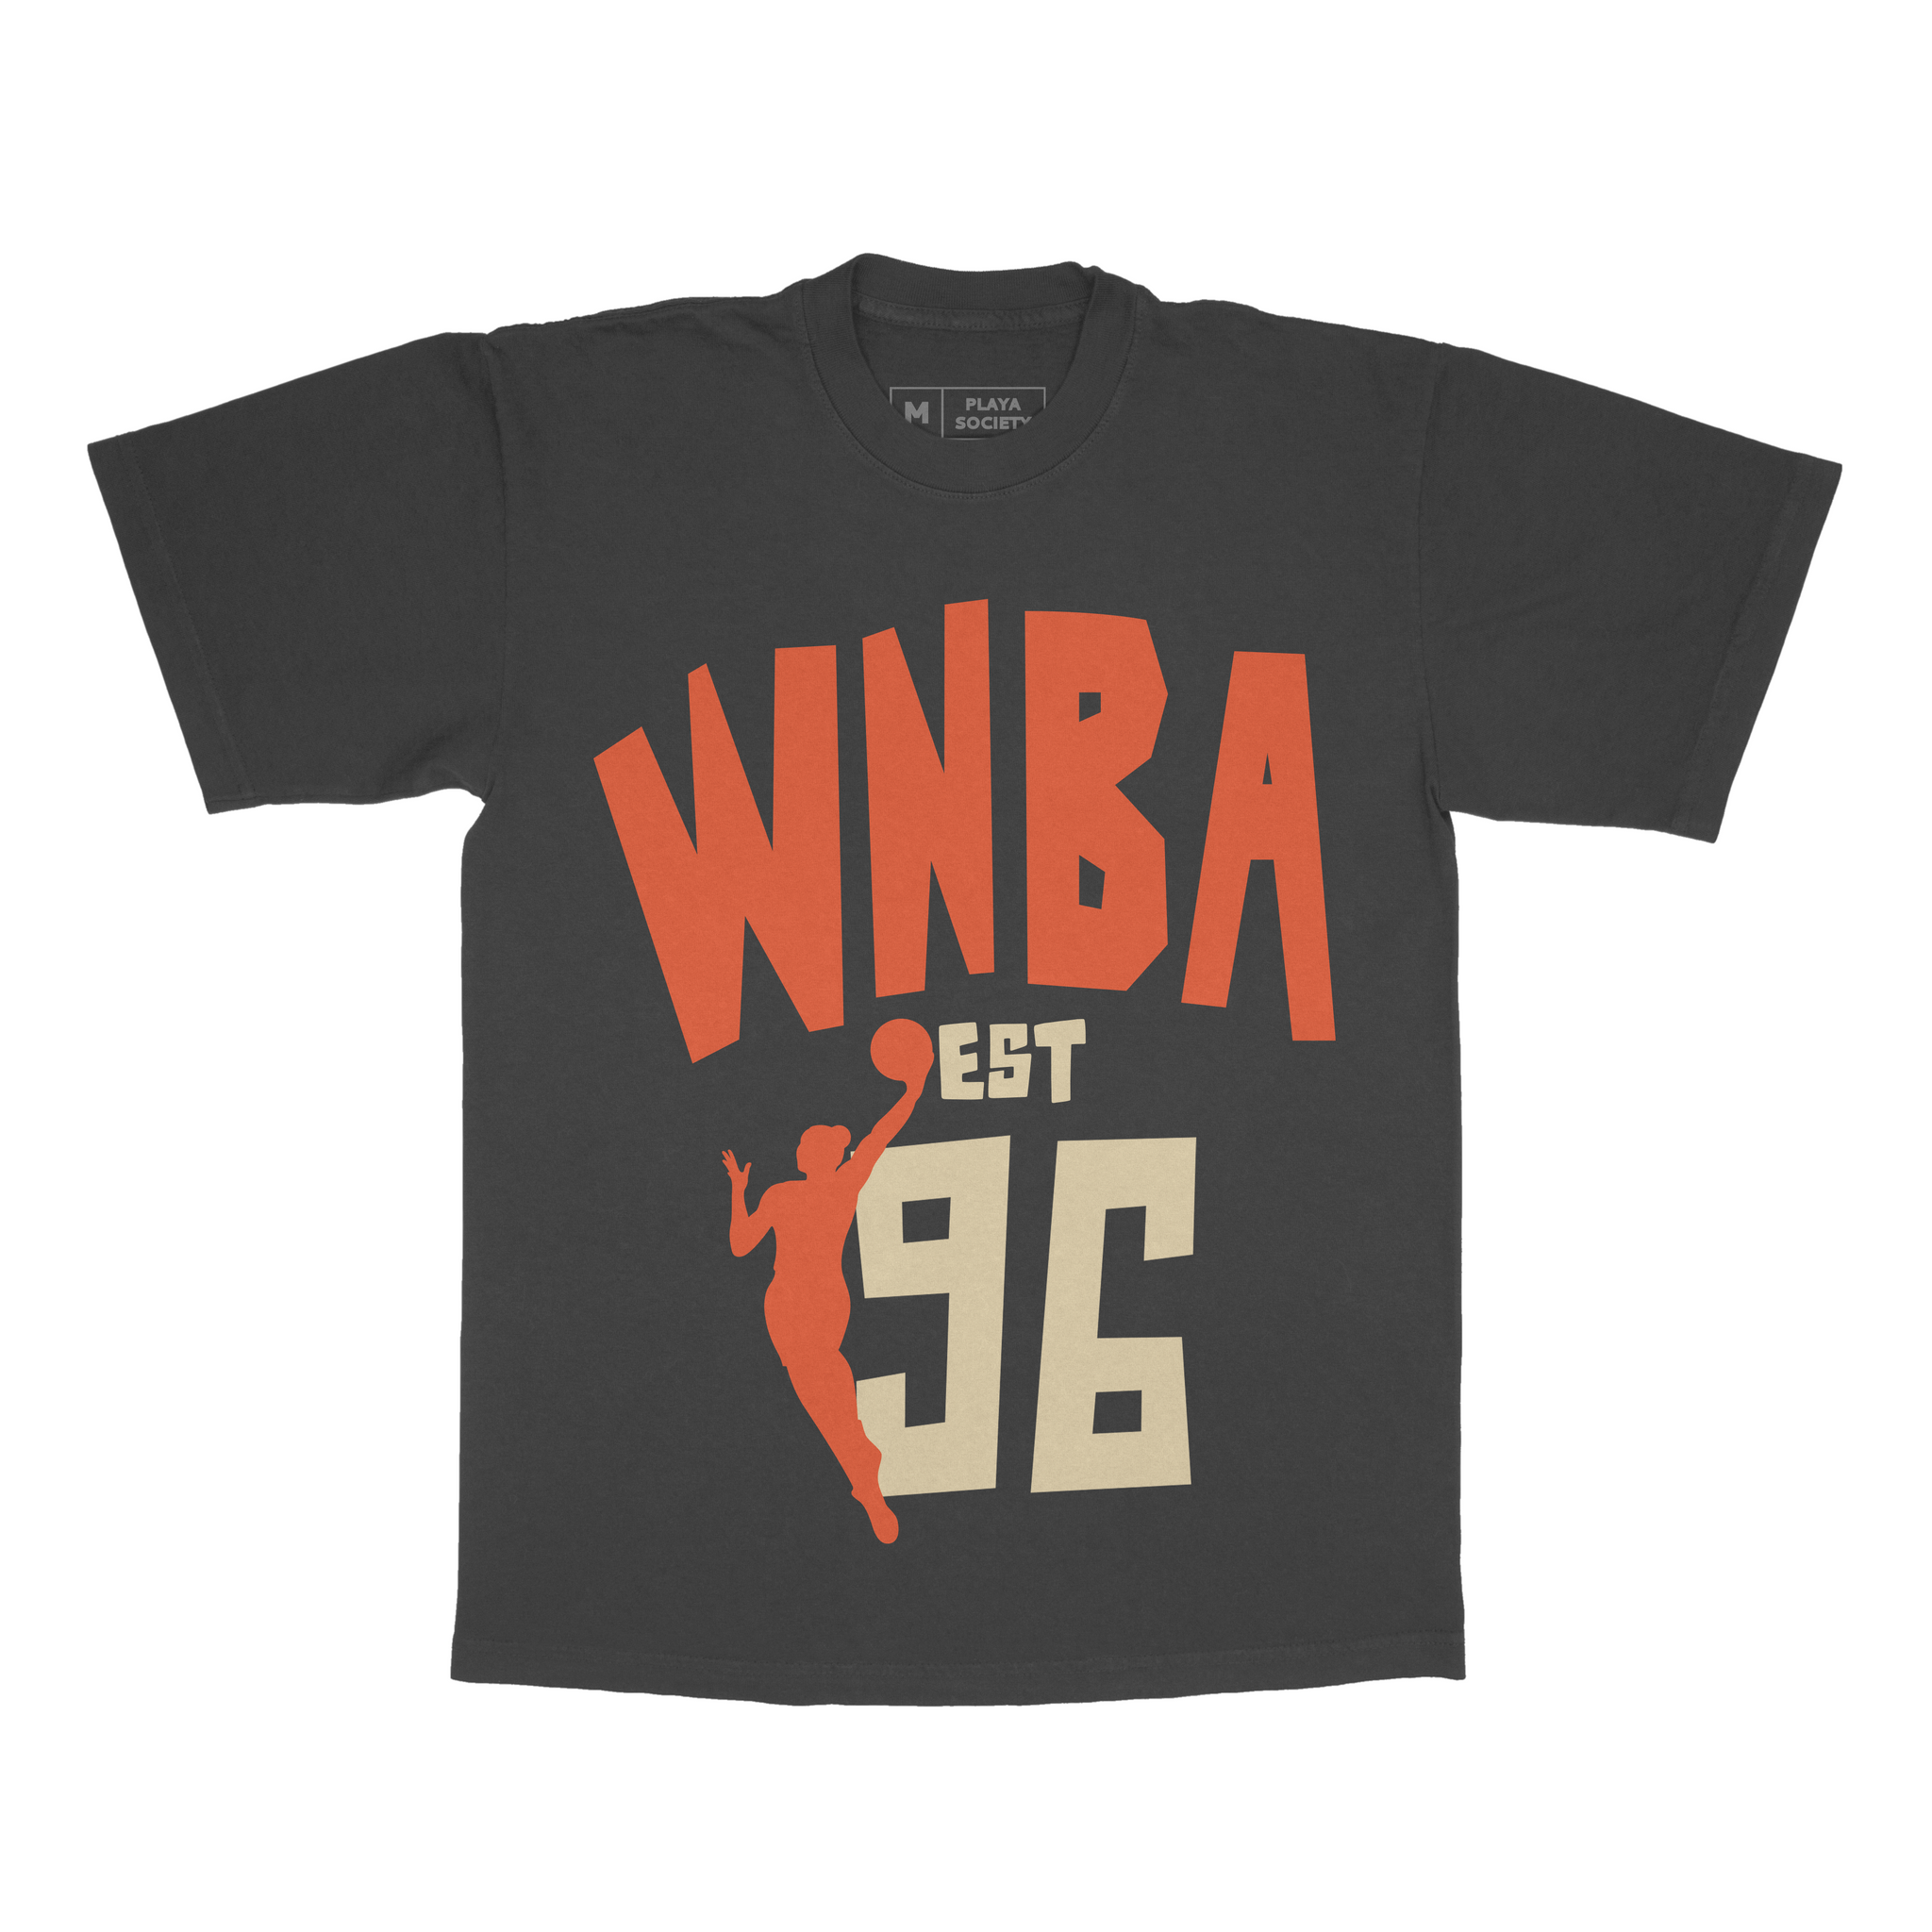 Playa Society WNBA 96 T-Shirt